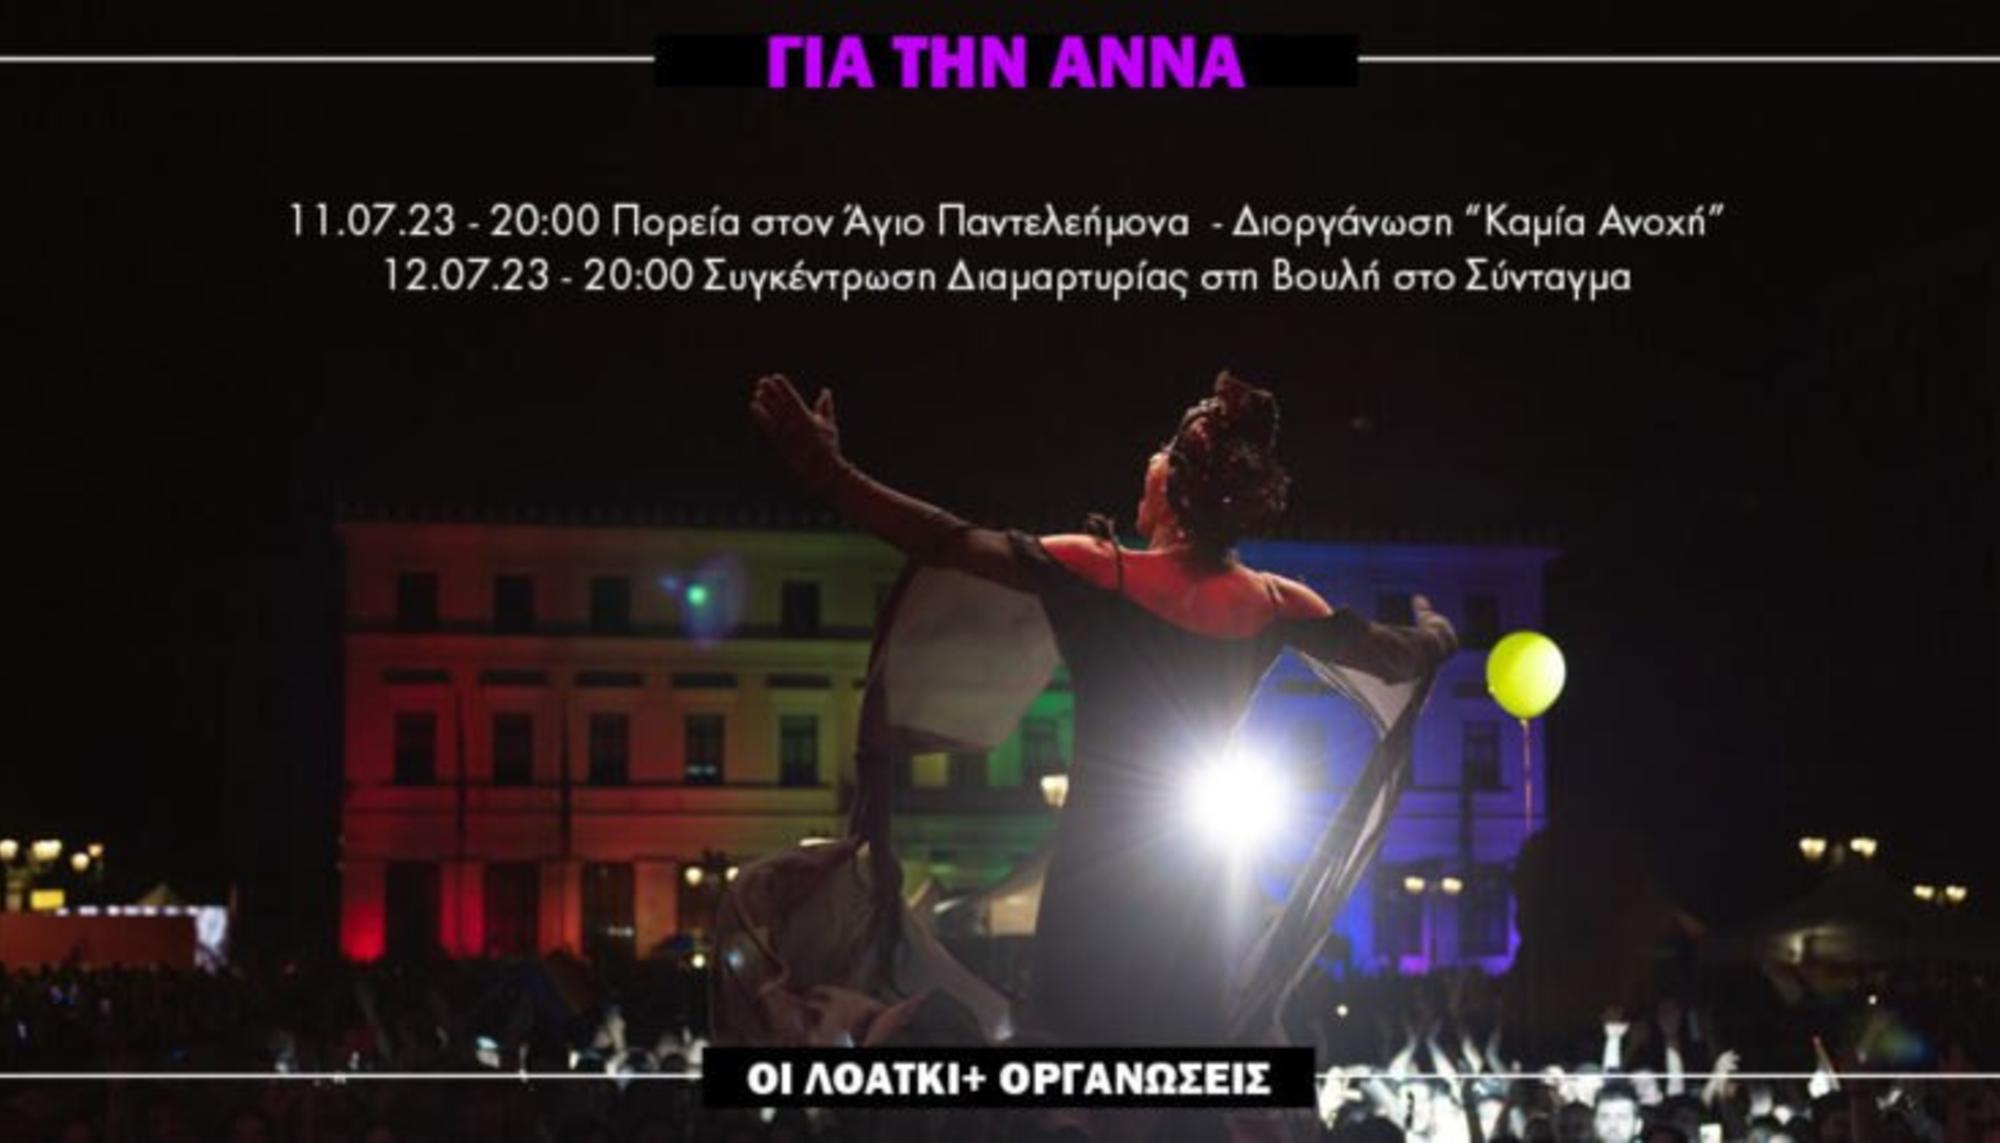 Convocatoria en protesta por el brutal asesinato de Anna Ivankova